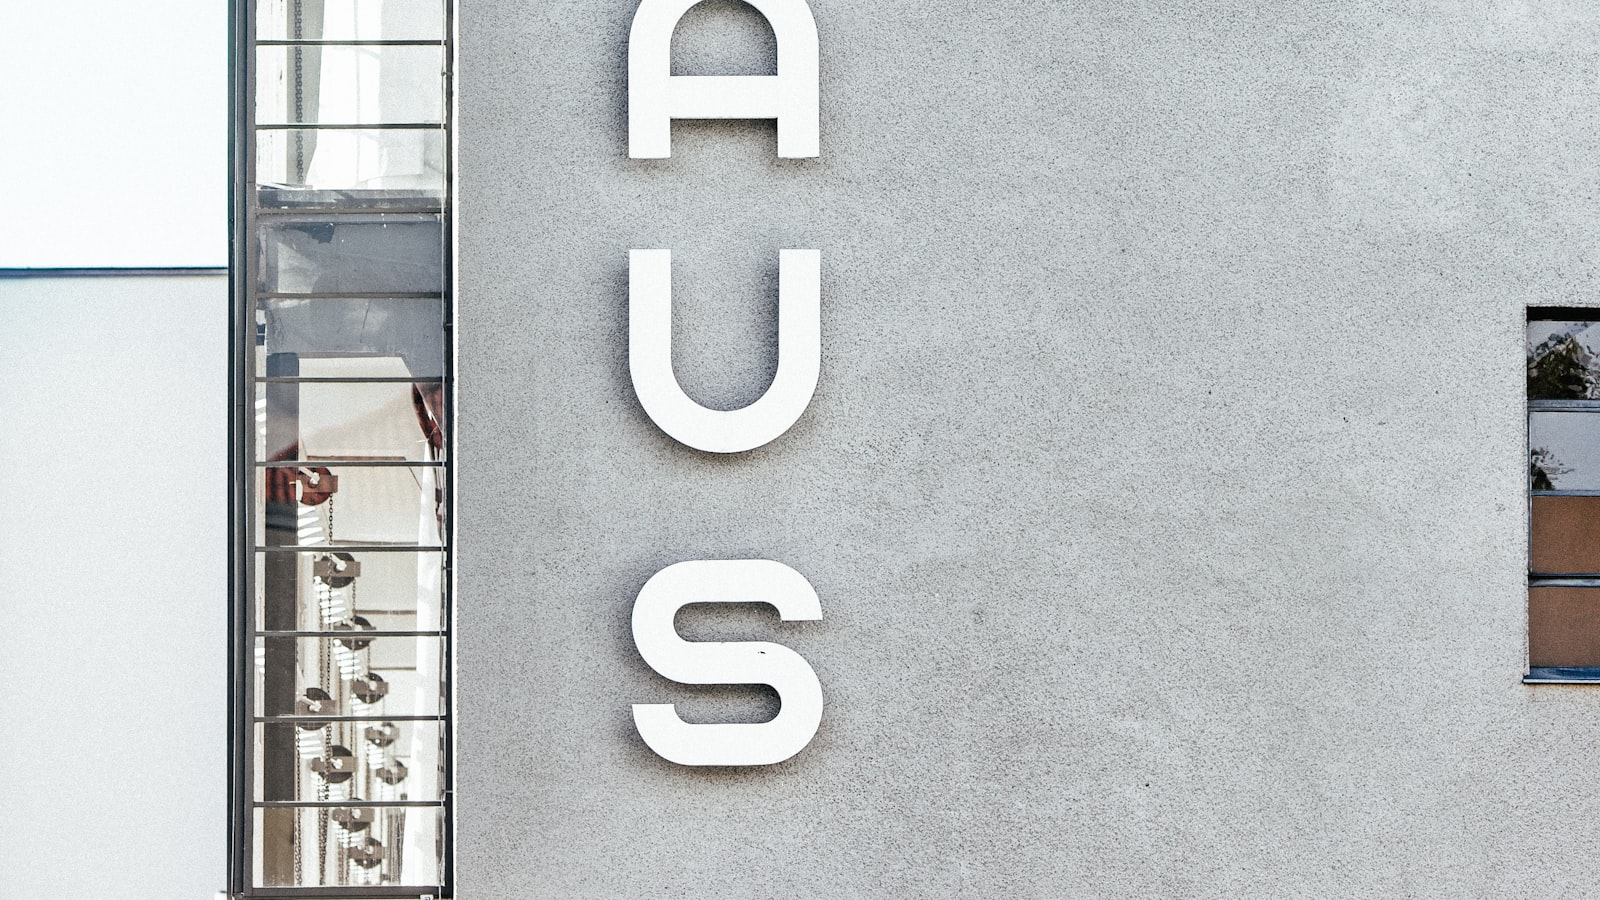 Bauhaus Building, Dessau